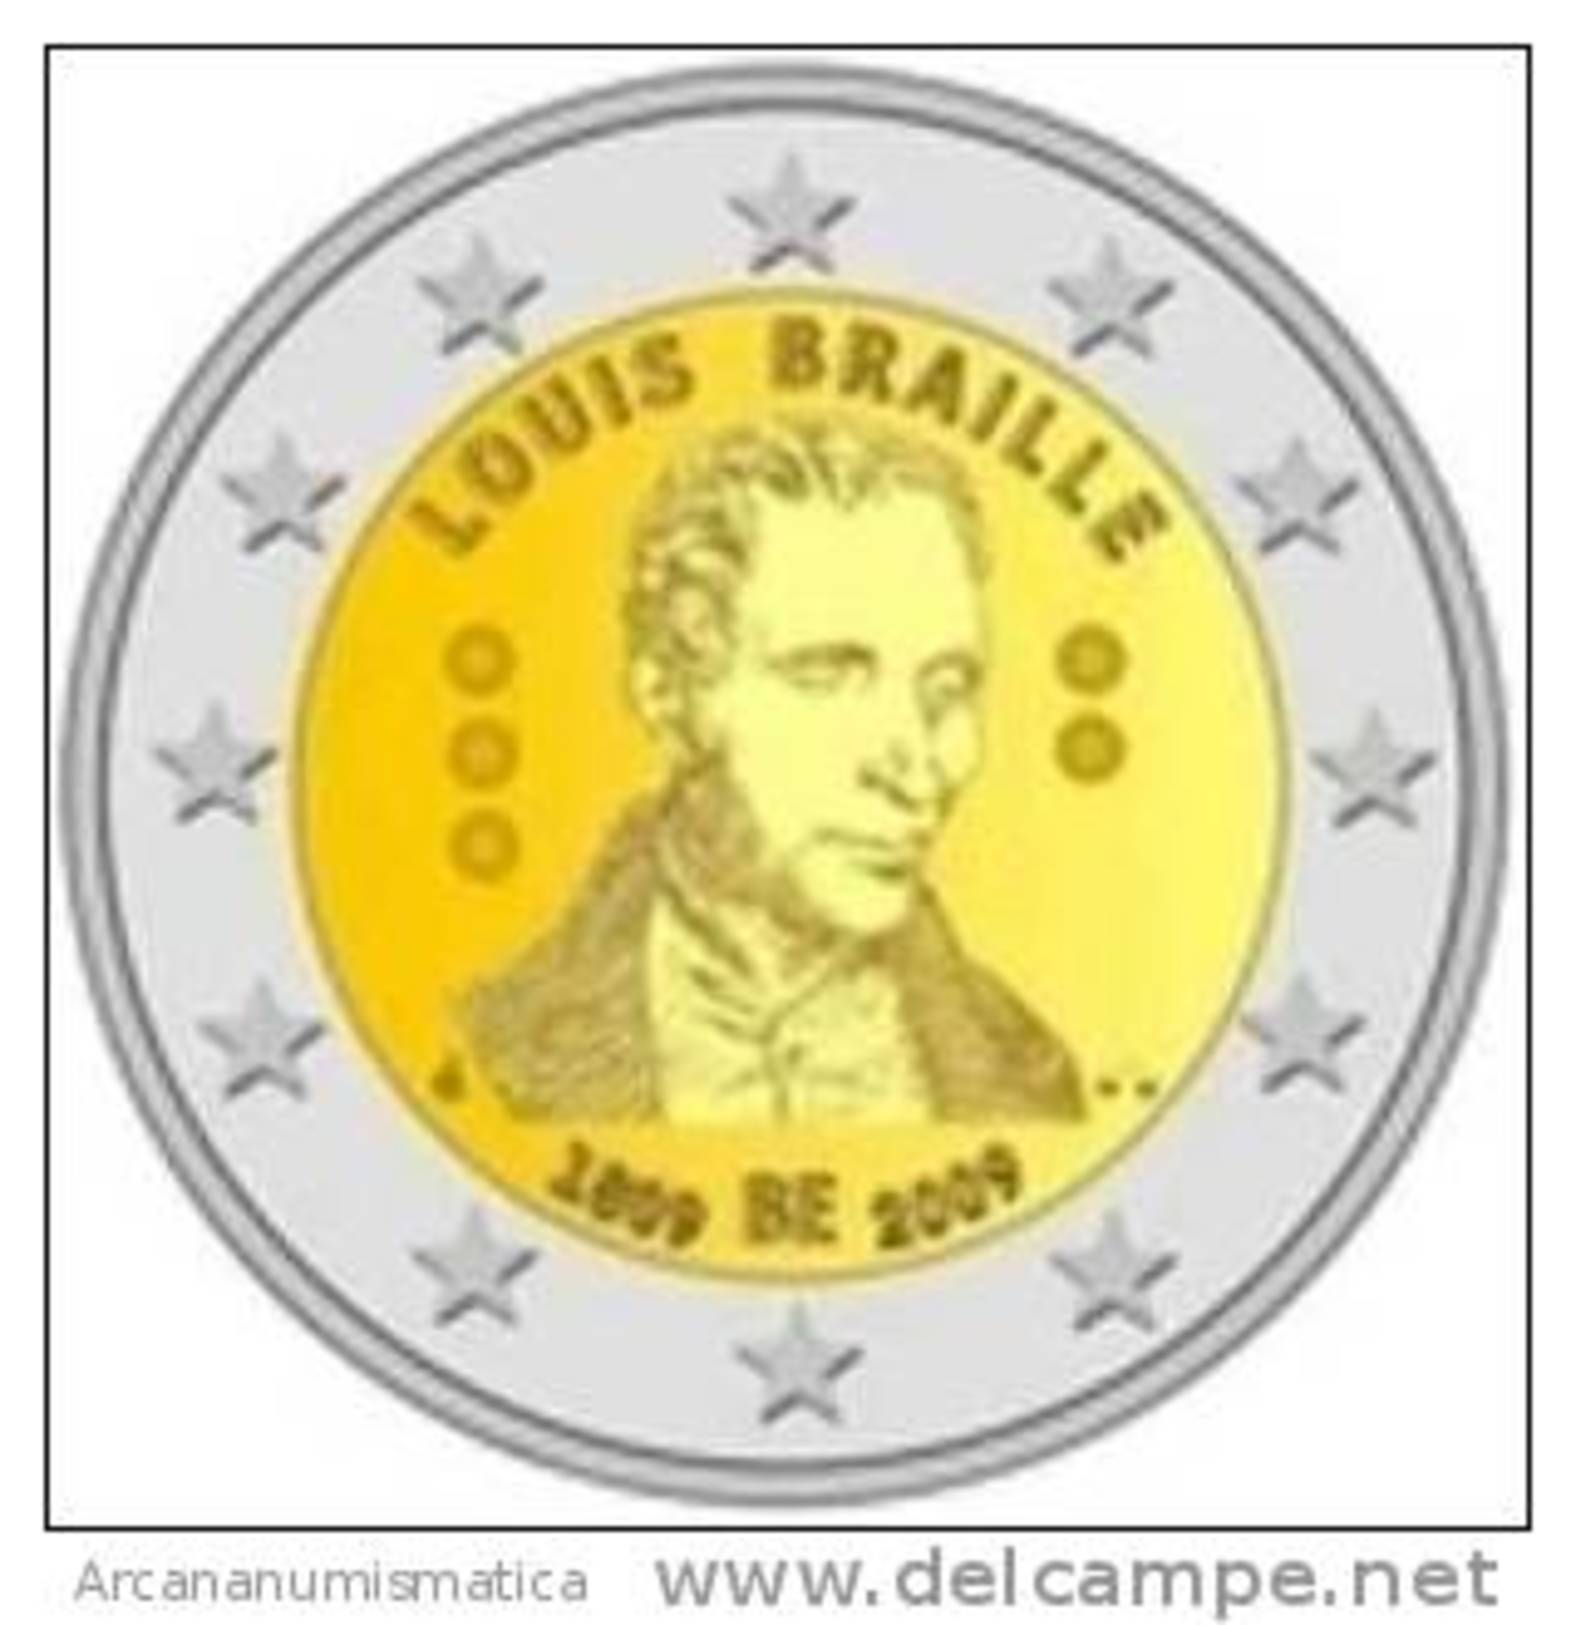 BELGICA  2€  2009  SC/UNC  "LOUIS BRAILLE"  BIMETALICA   DL-7262 - Belgique